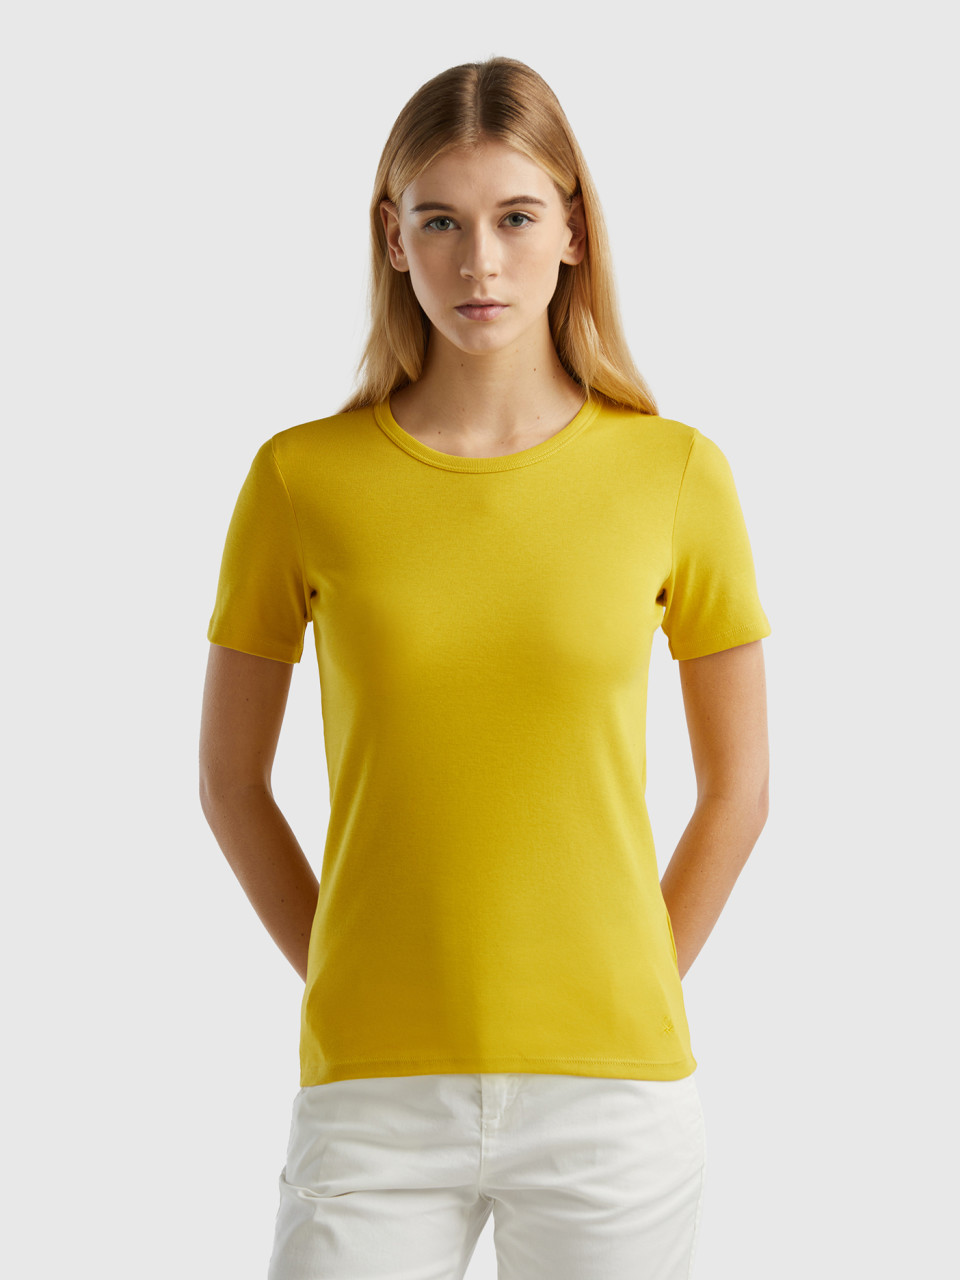 Benetton, Camiseta De Algodón De Fibra Larga, Amarillo, Mujer